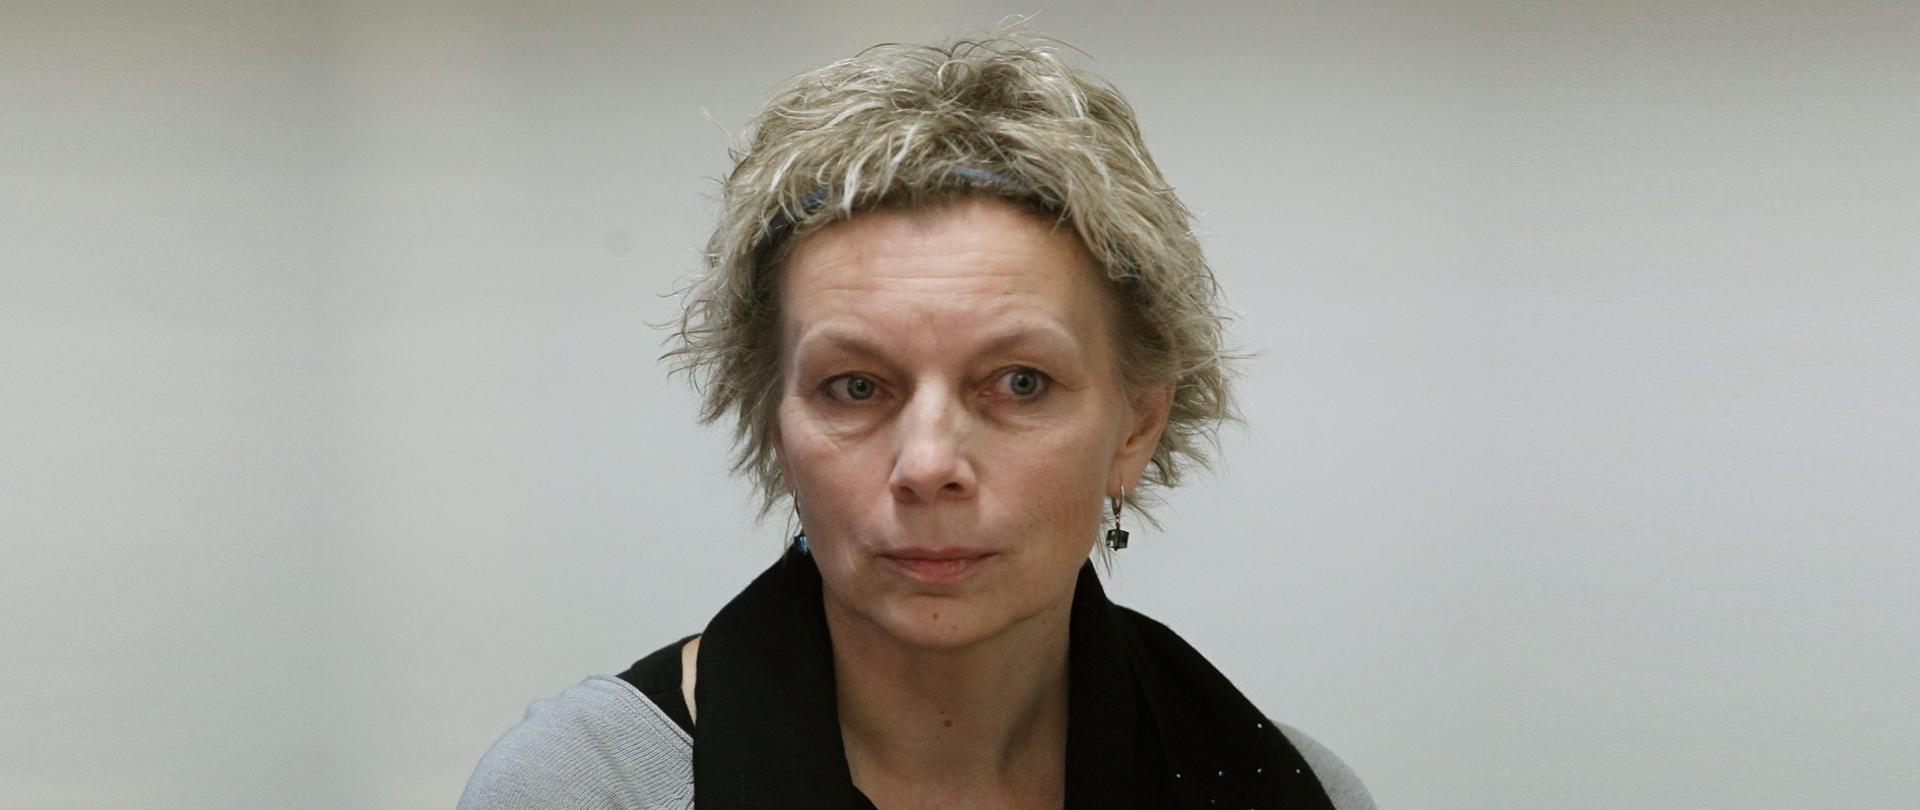 Iwona Chmielewska, fot. Radek Pietruszka/PAP